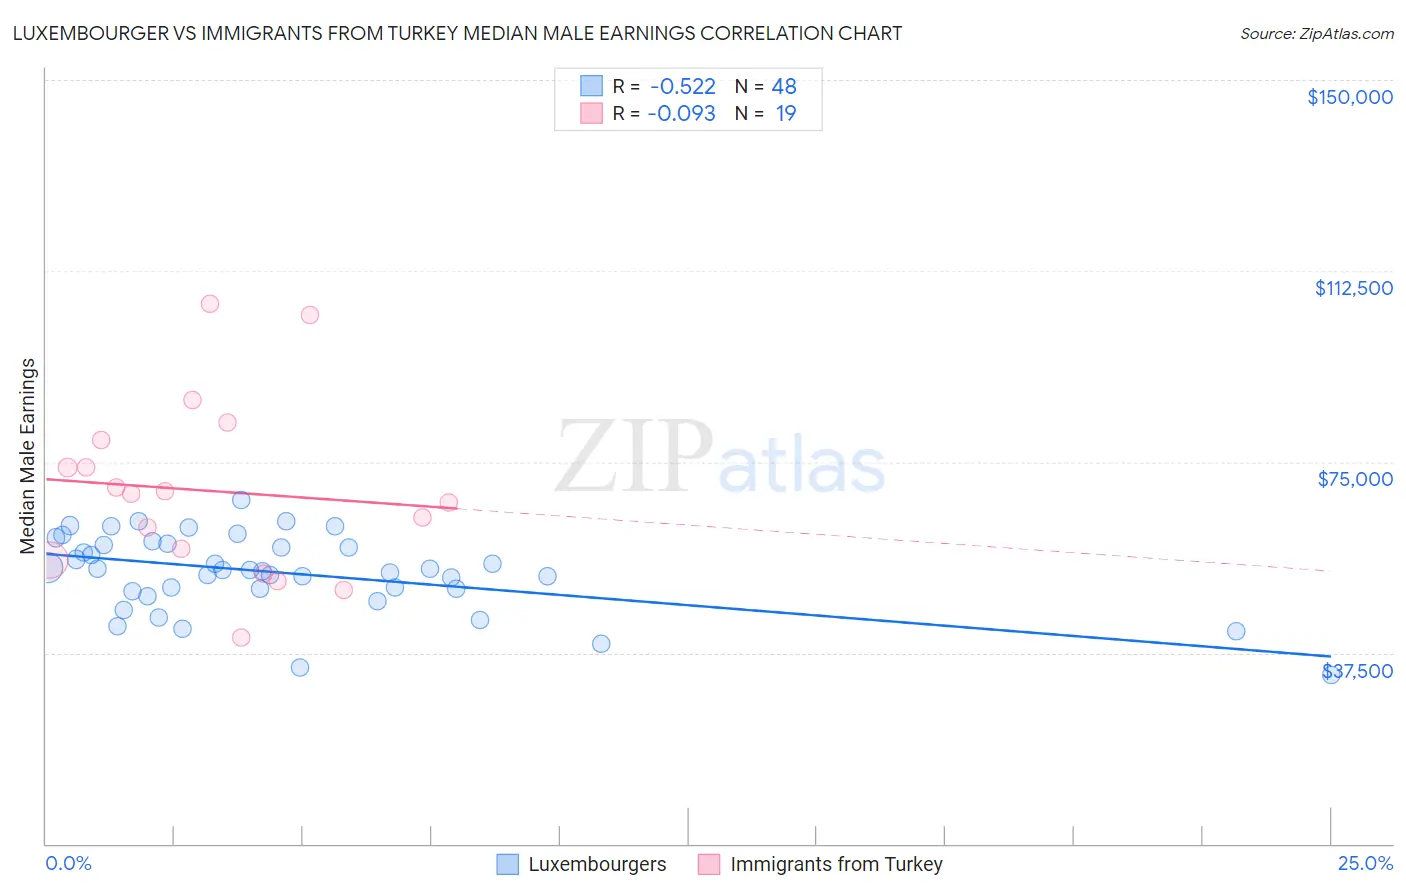 Luxembourger vs Immigrants from Turkey Median Male Earnings